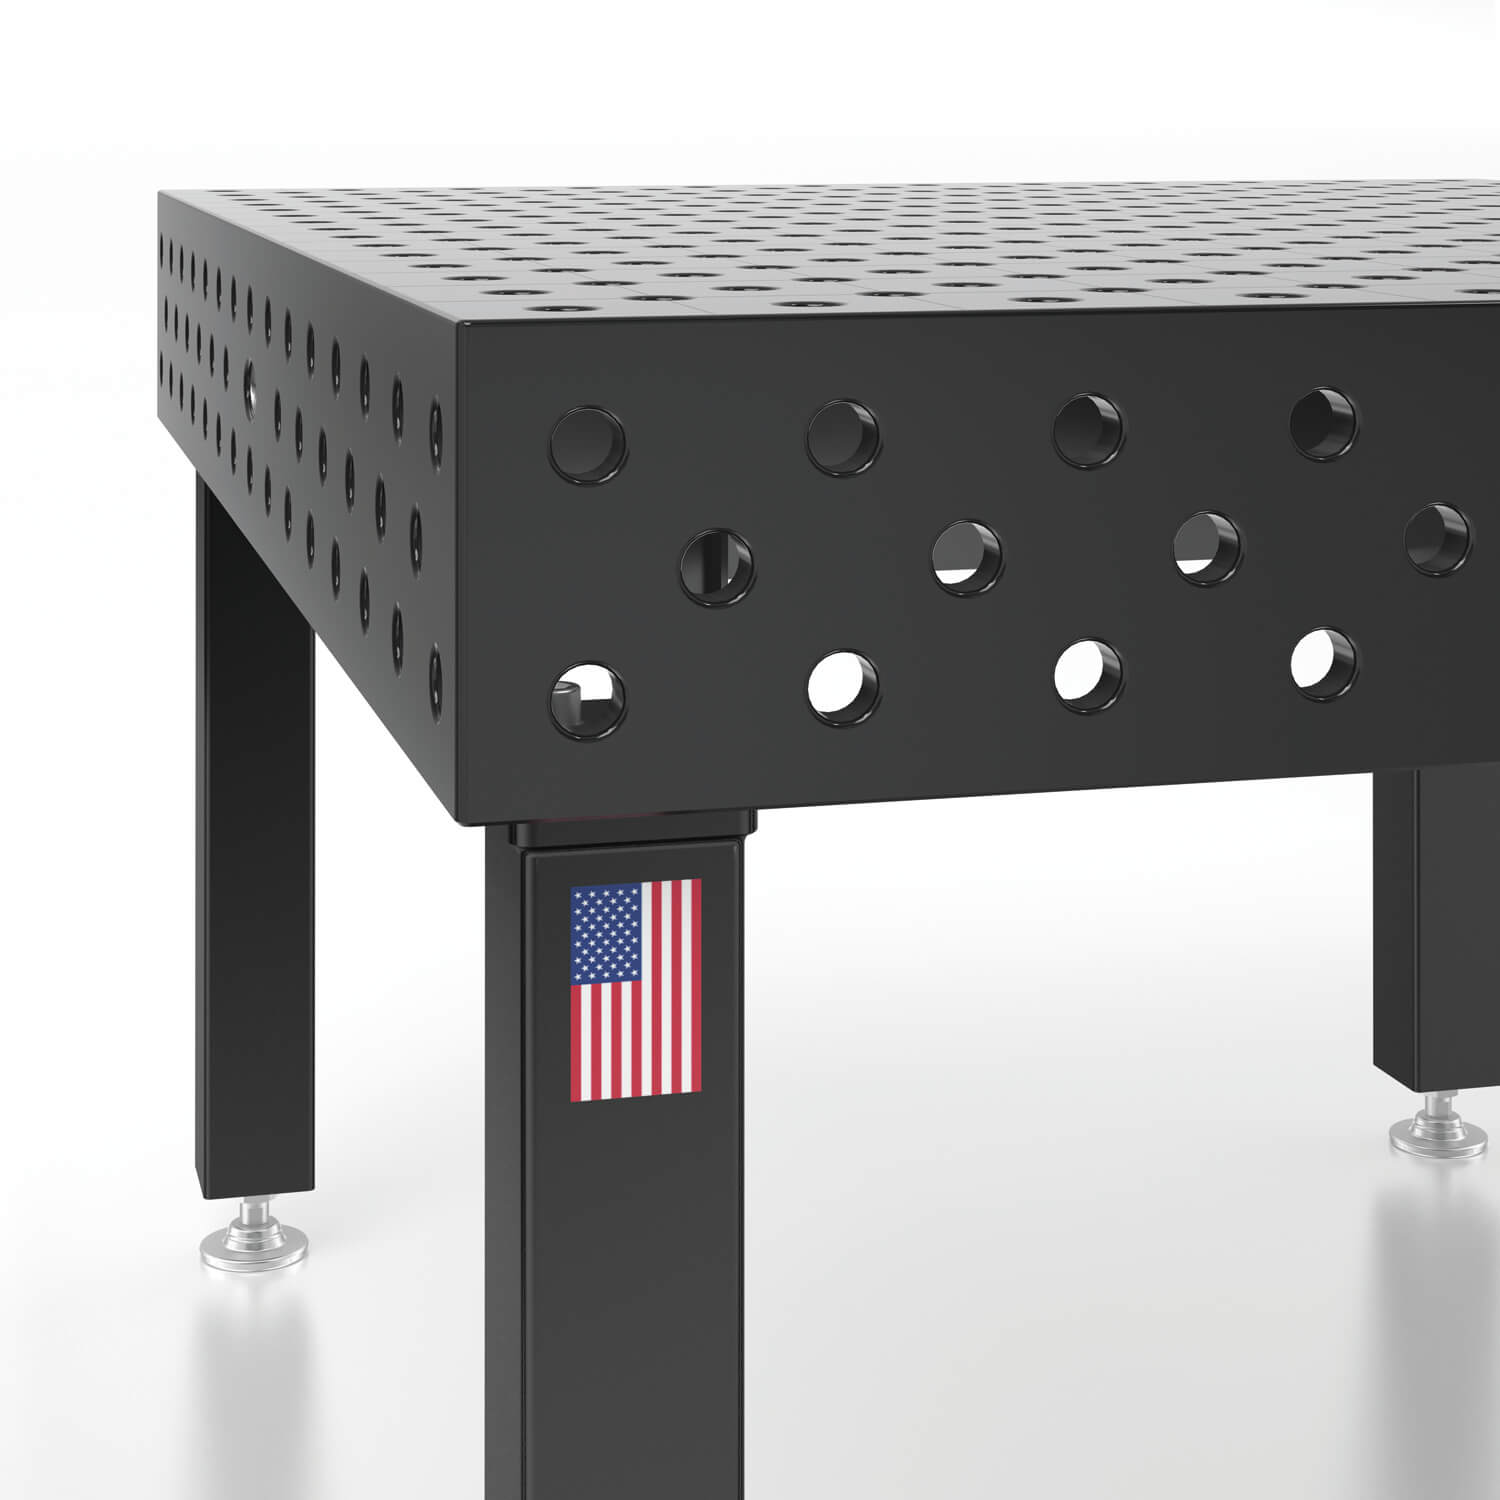 US280050.XD7: System 28 5'x5' (60"x60") Siegmund Imperial Series (Inch) Welding Table with Plasma Nitration